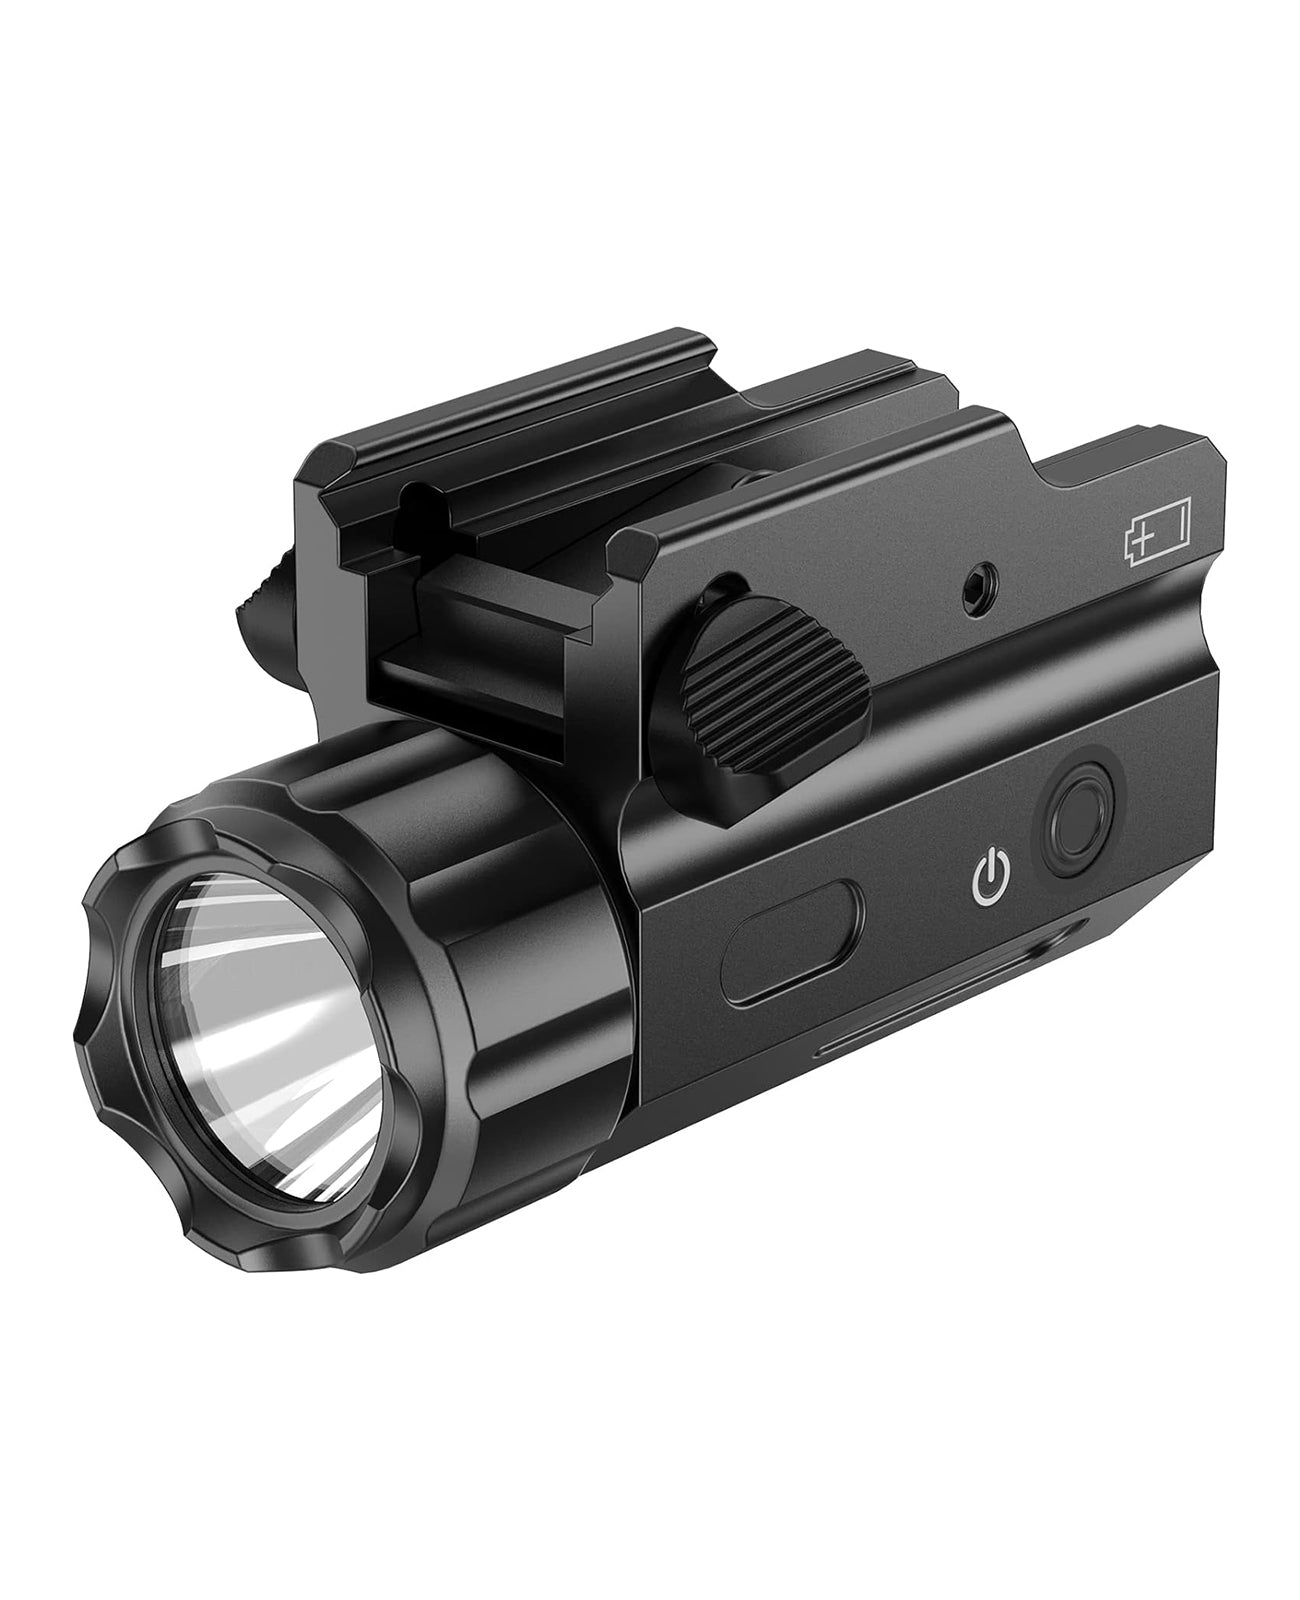 EZshoot Tactical Flashlight 250 Lumens Pistol Flashlight for Picatinny Rail